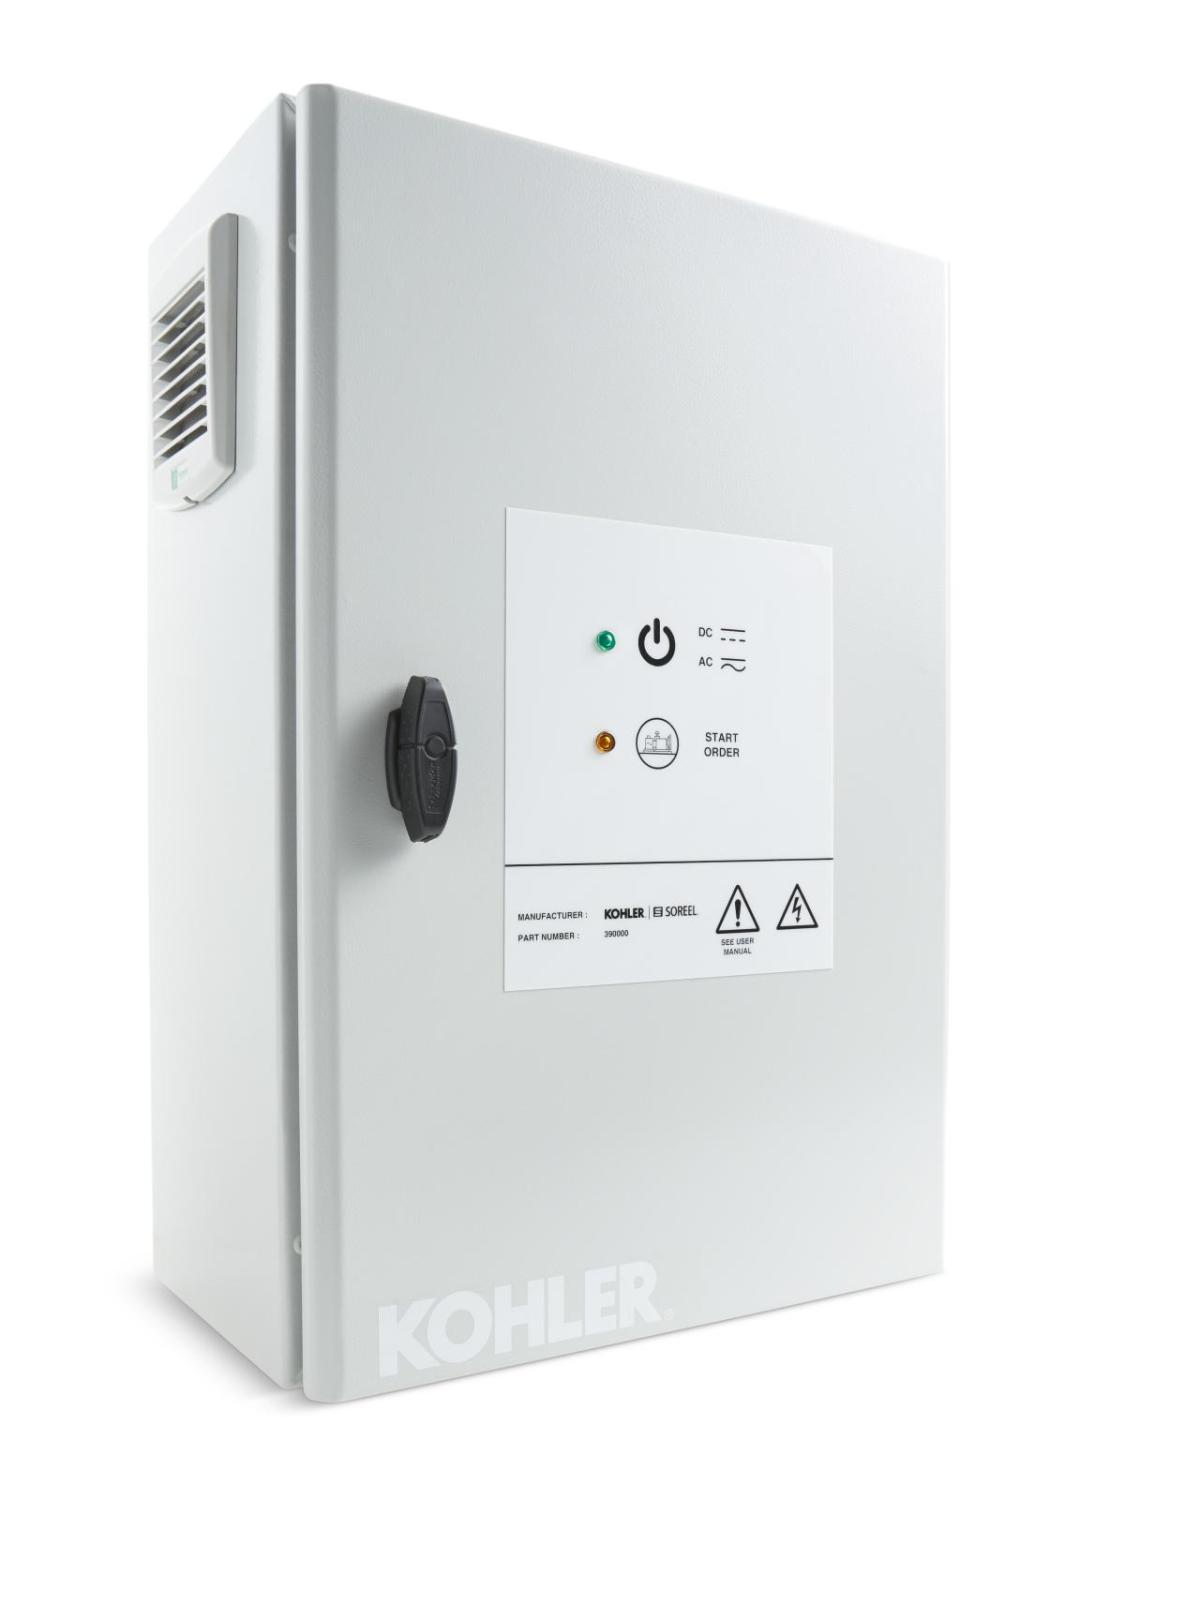 Kohler Unify device